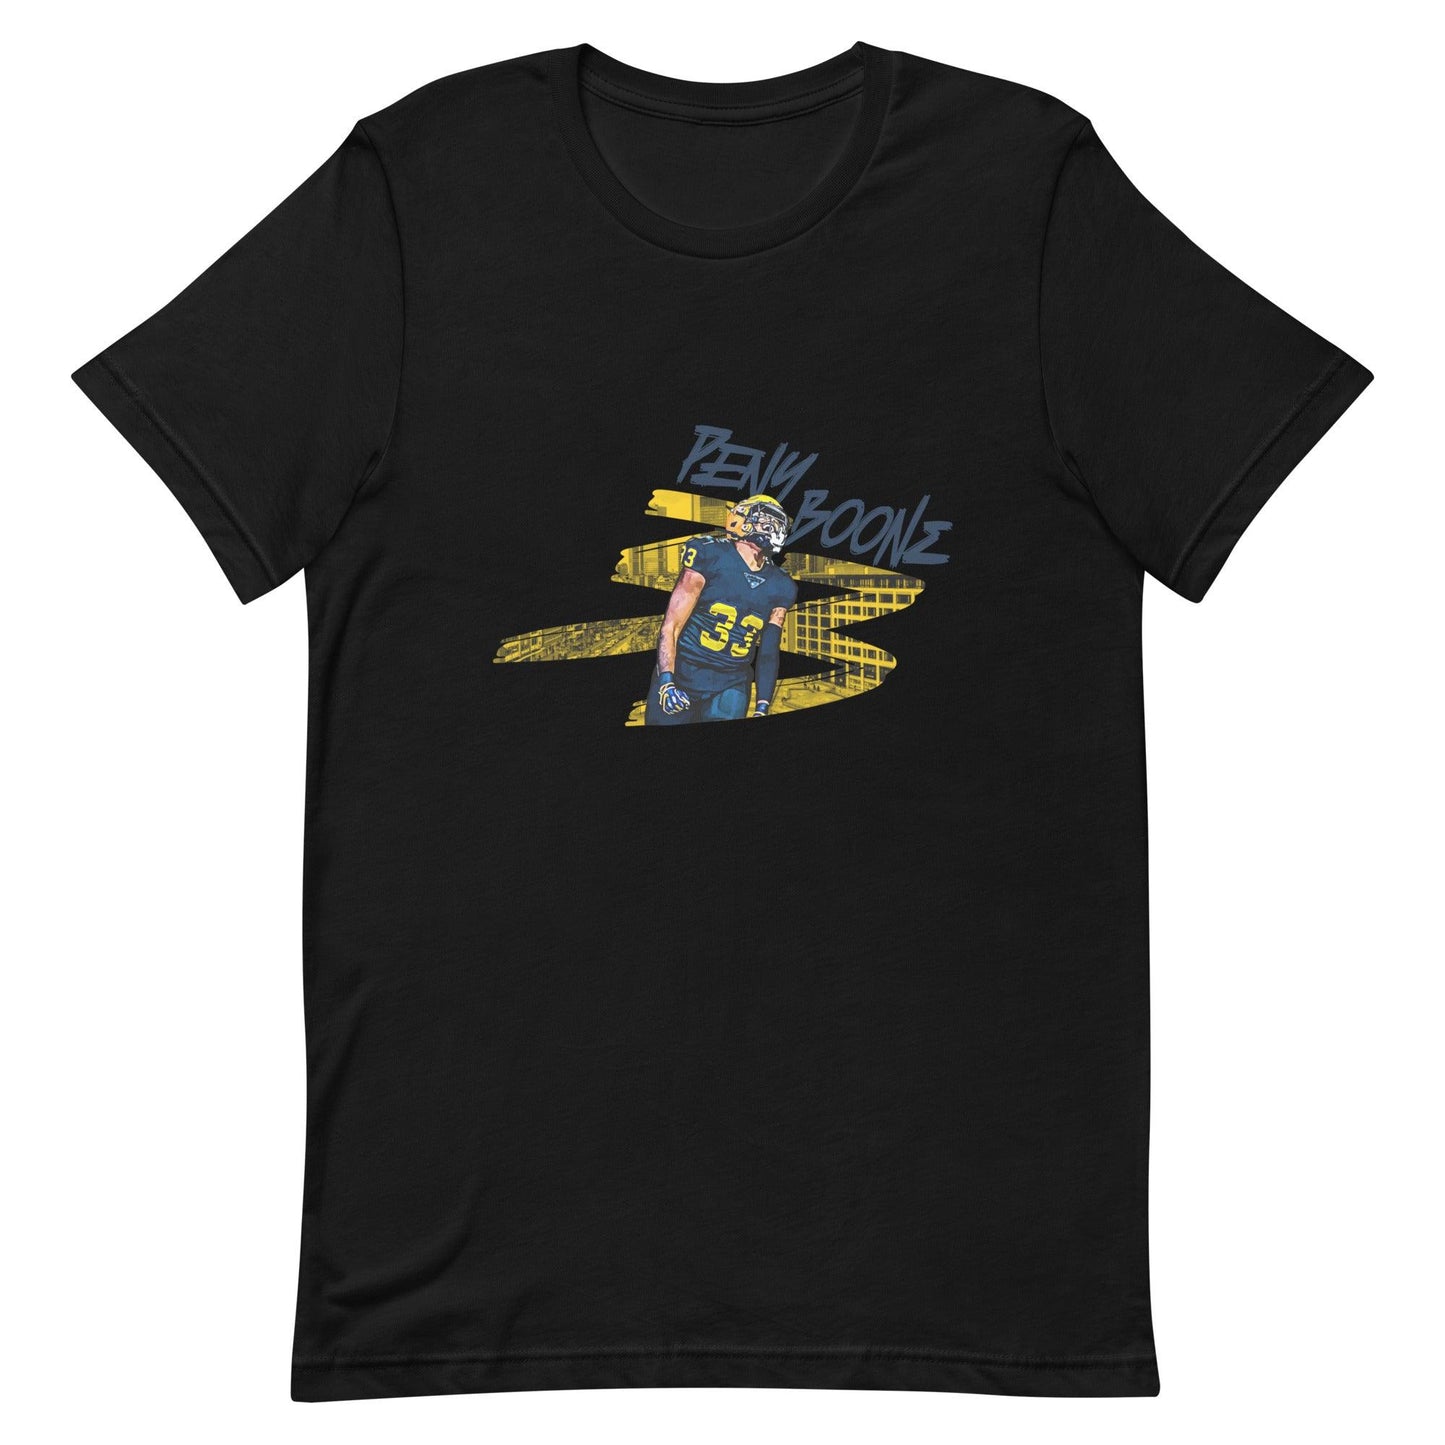 Peny Boone "Gameday" t-shirt - Fan Arch